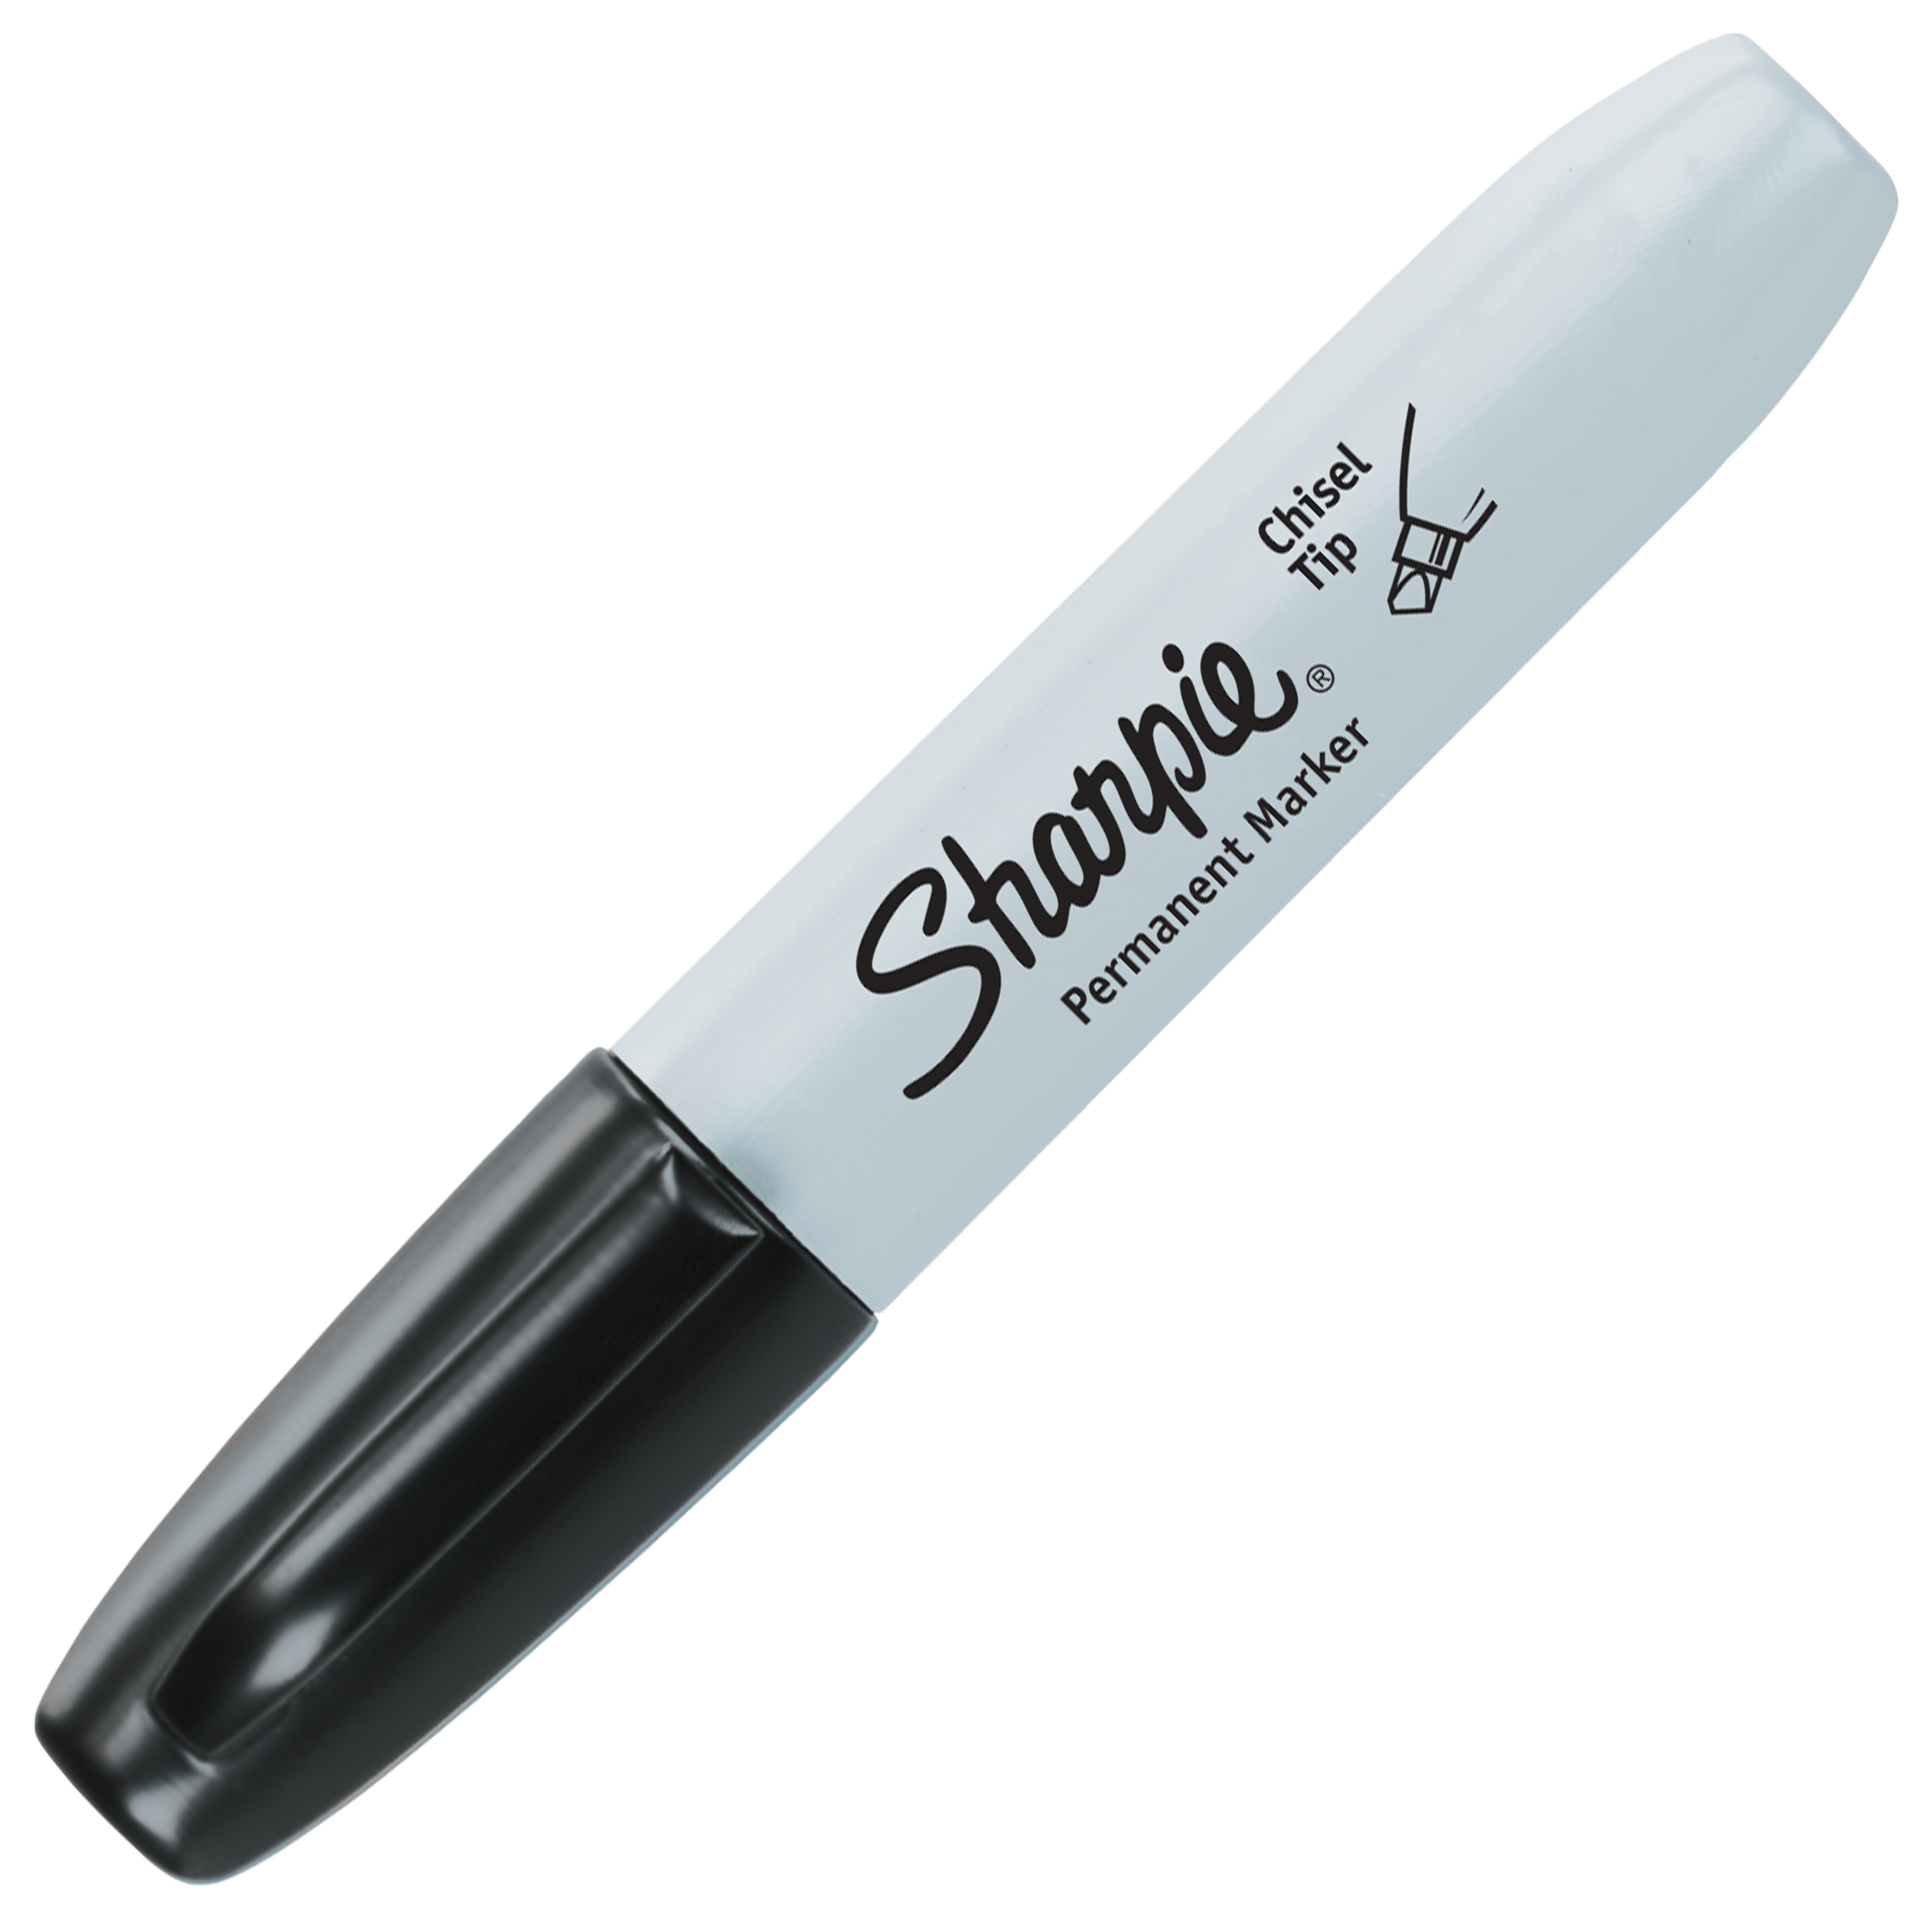 Sharpie Chisel Black Marker Pens - Pack of 2